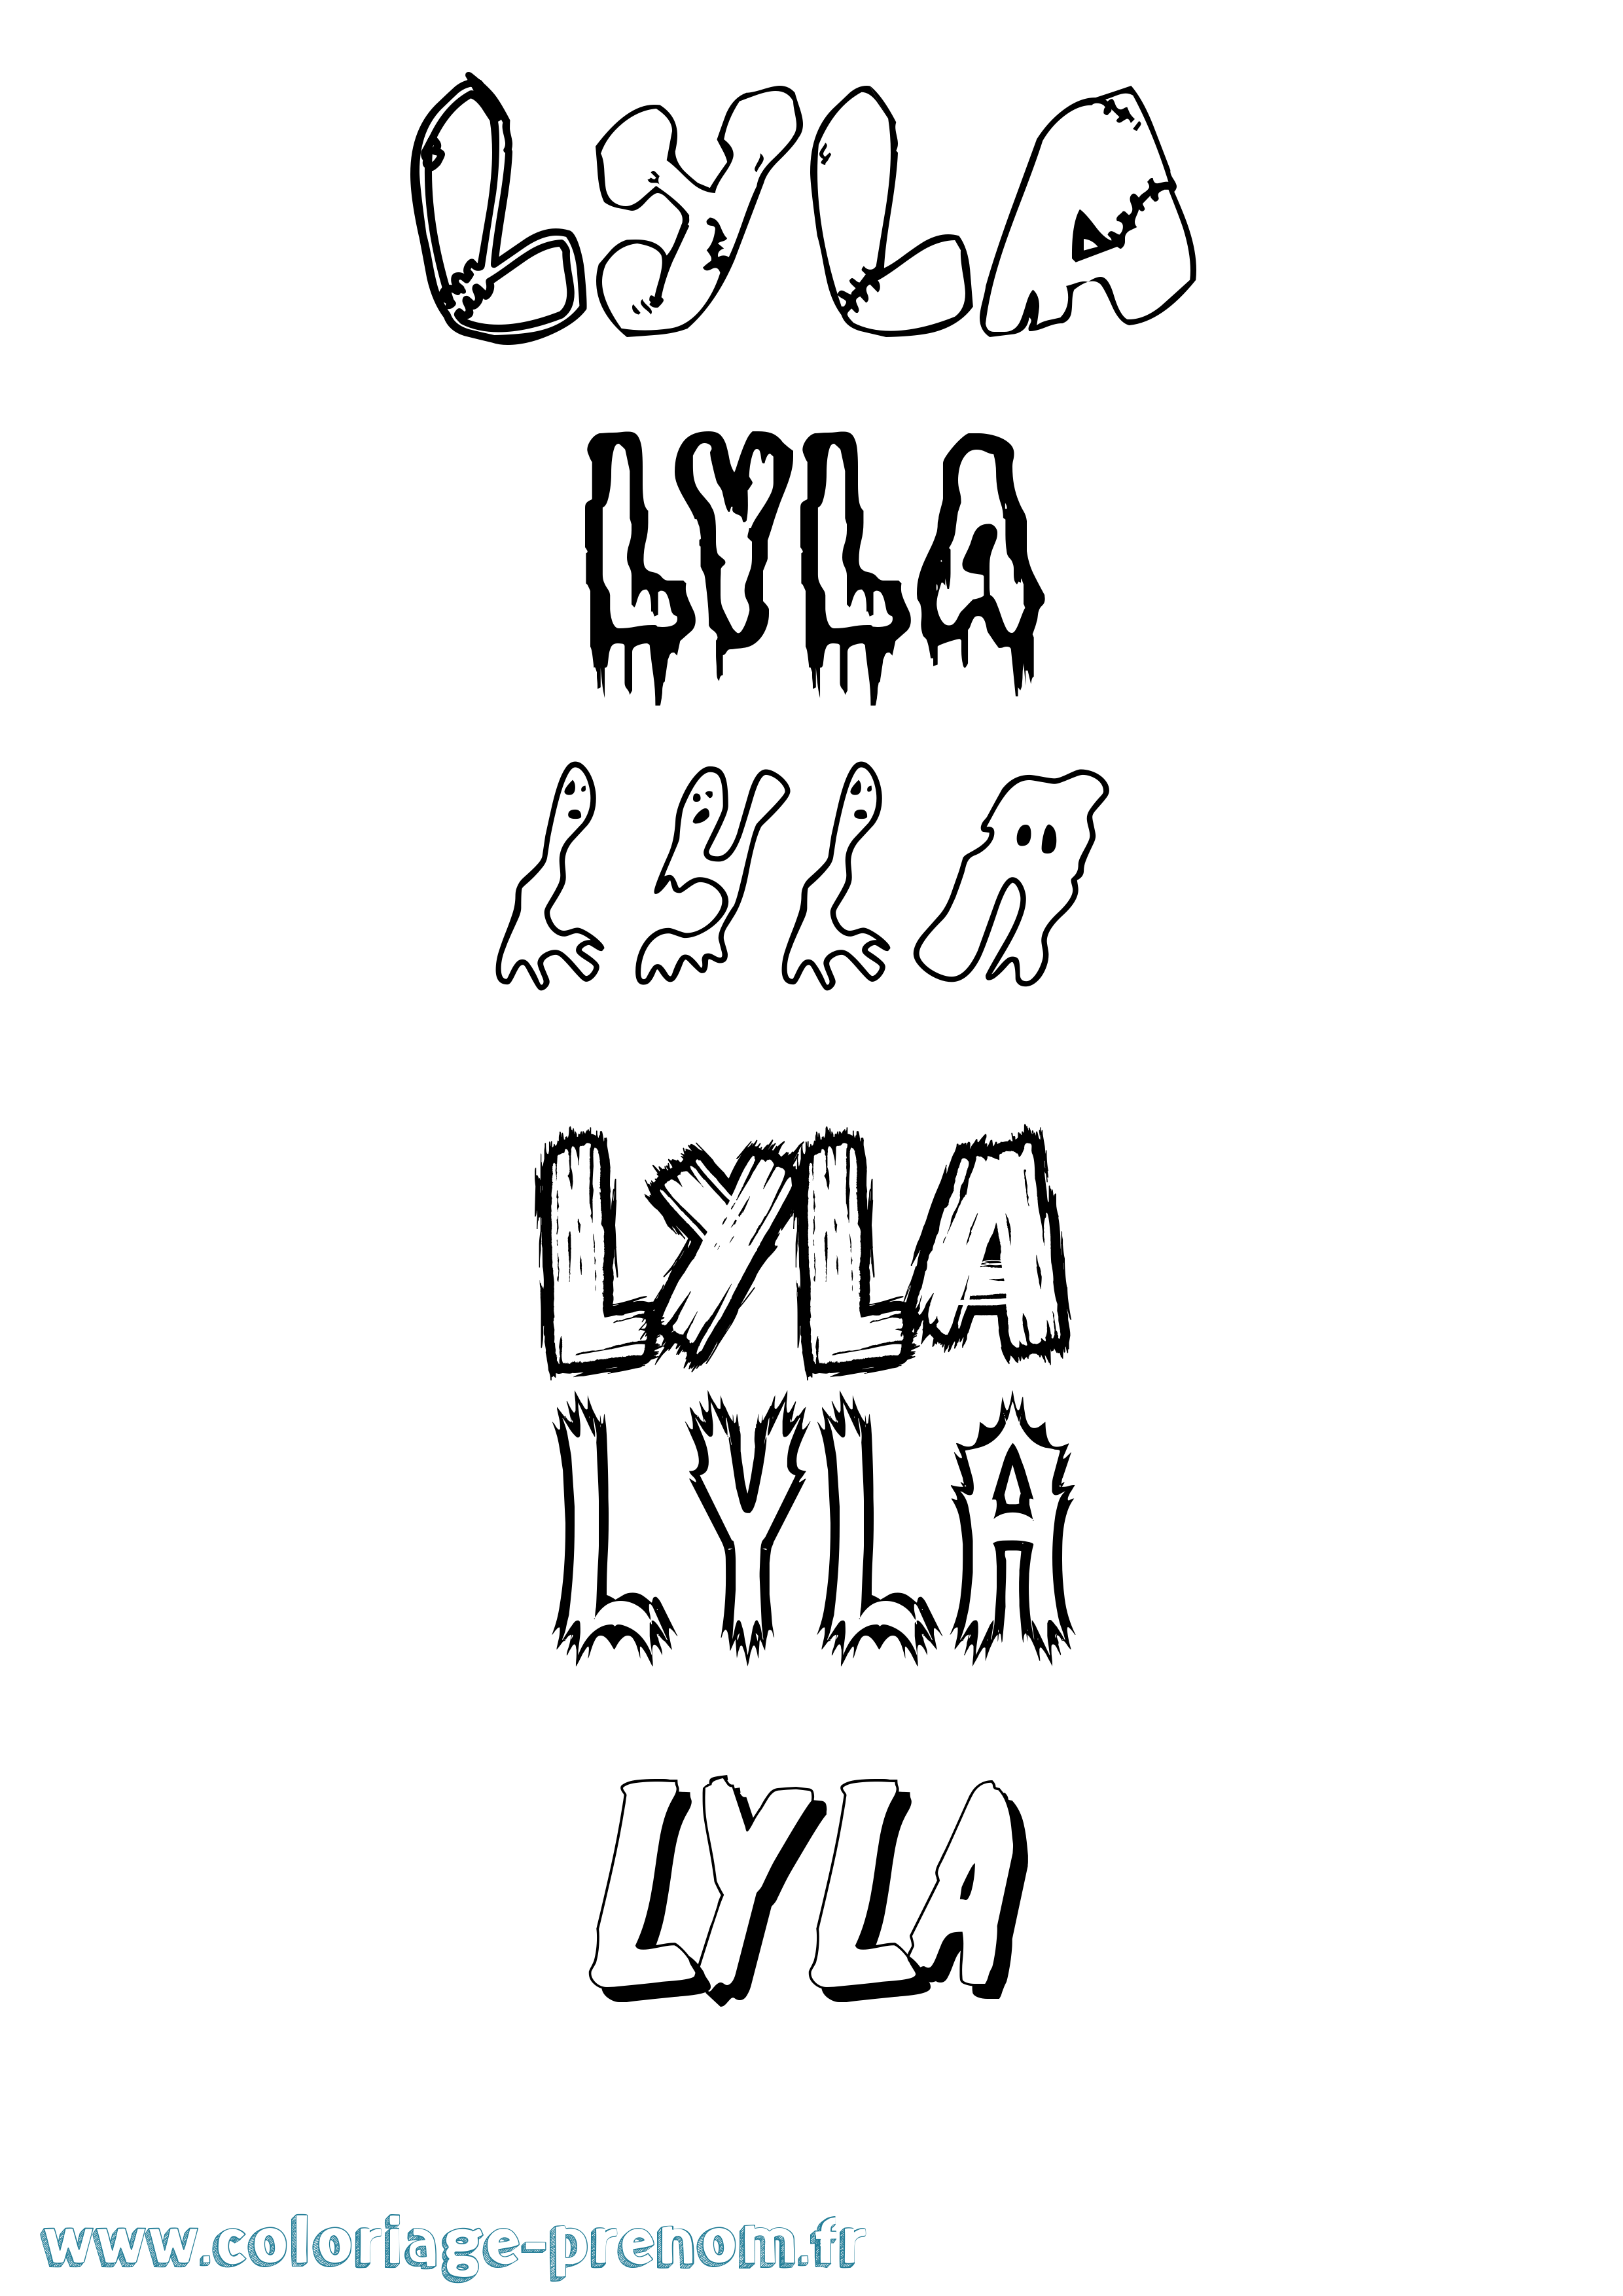 Coloriage prénom Lyla